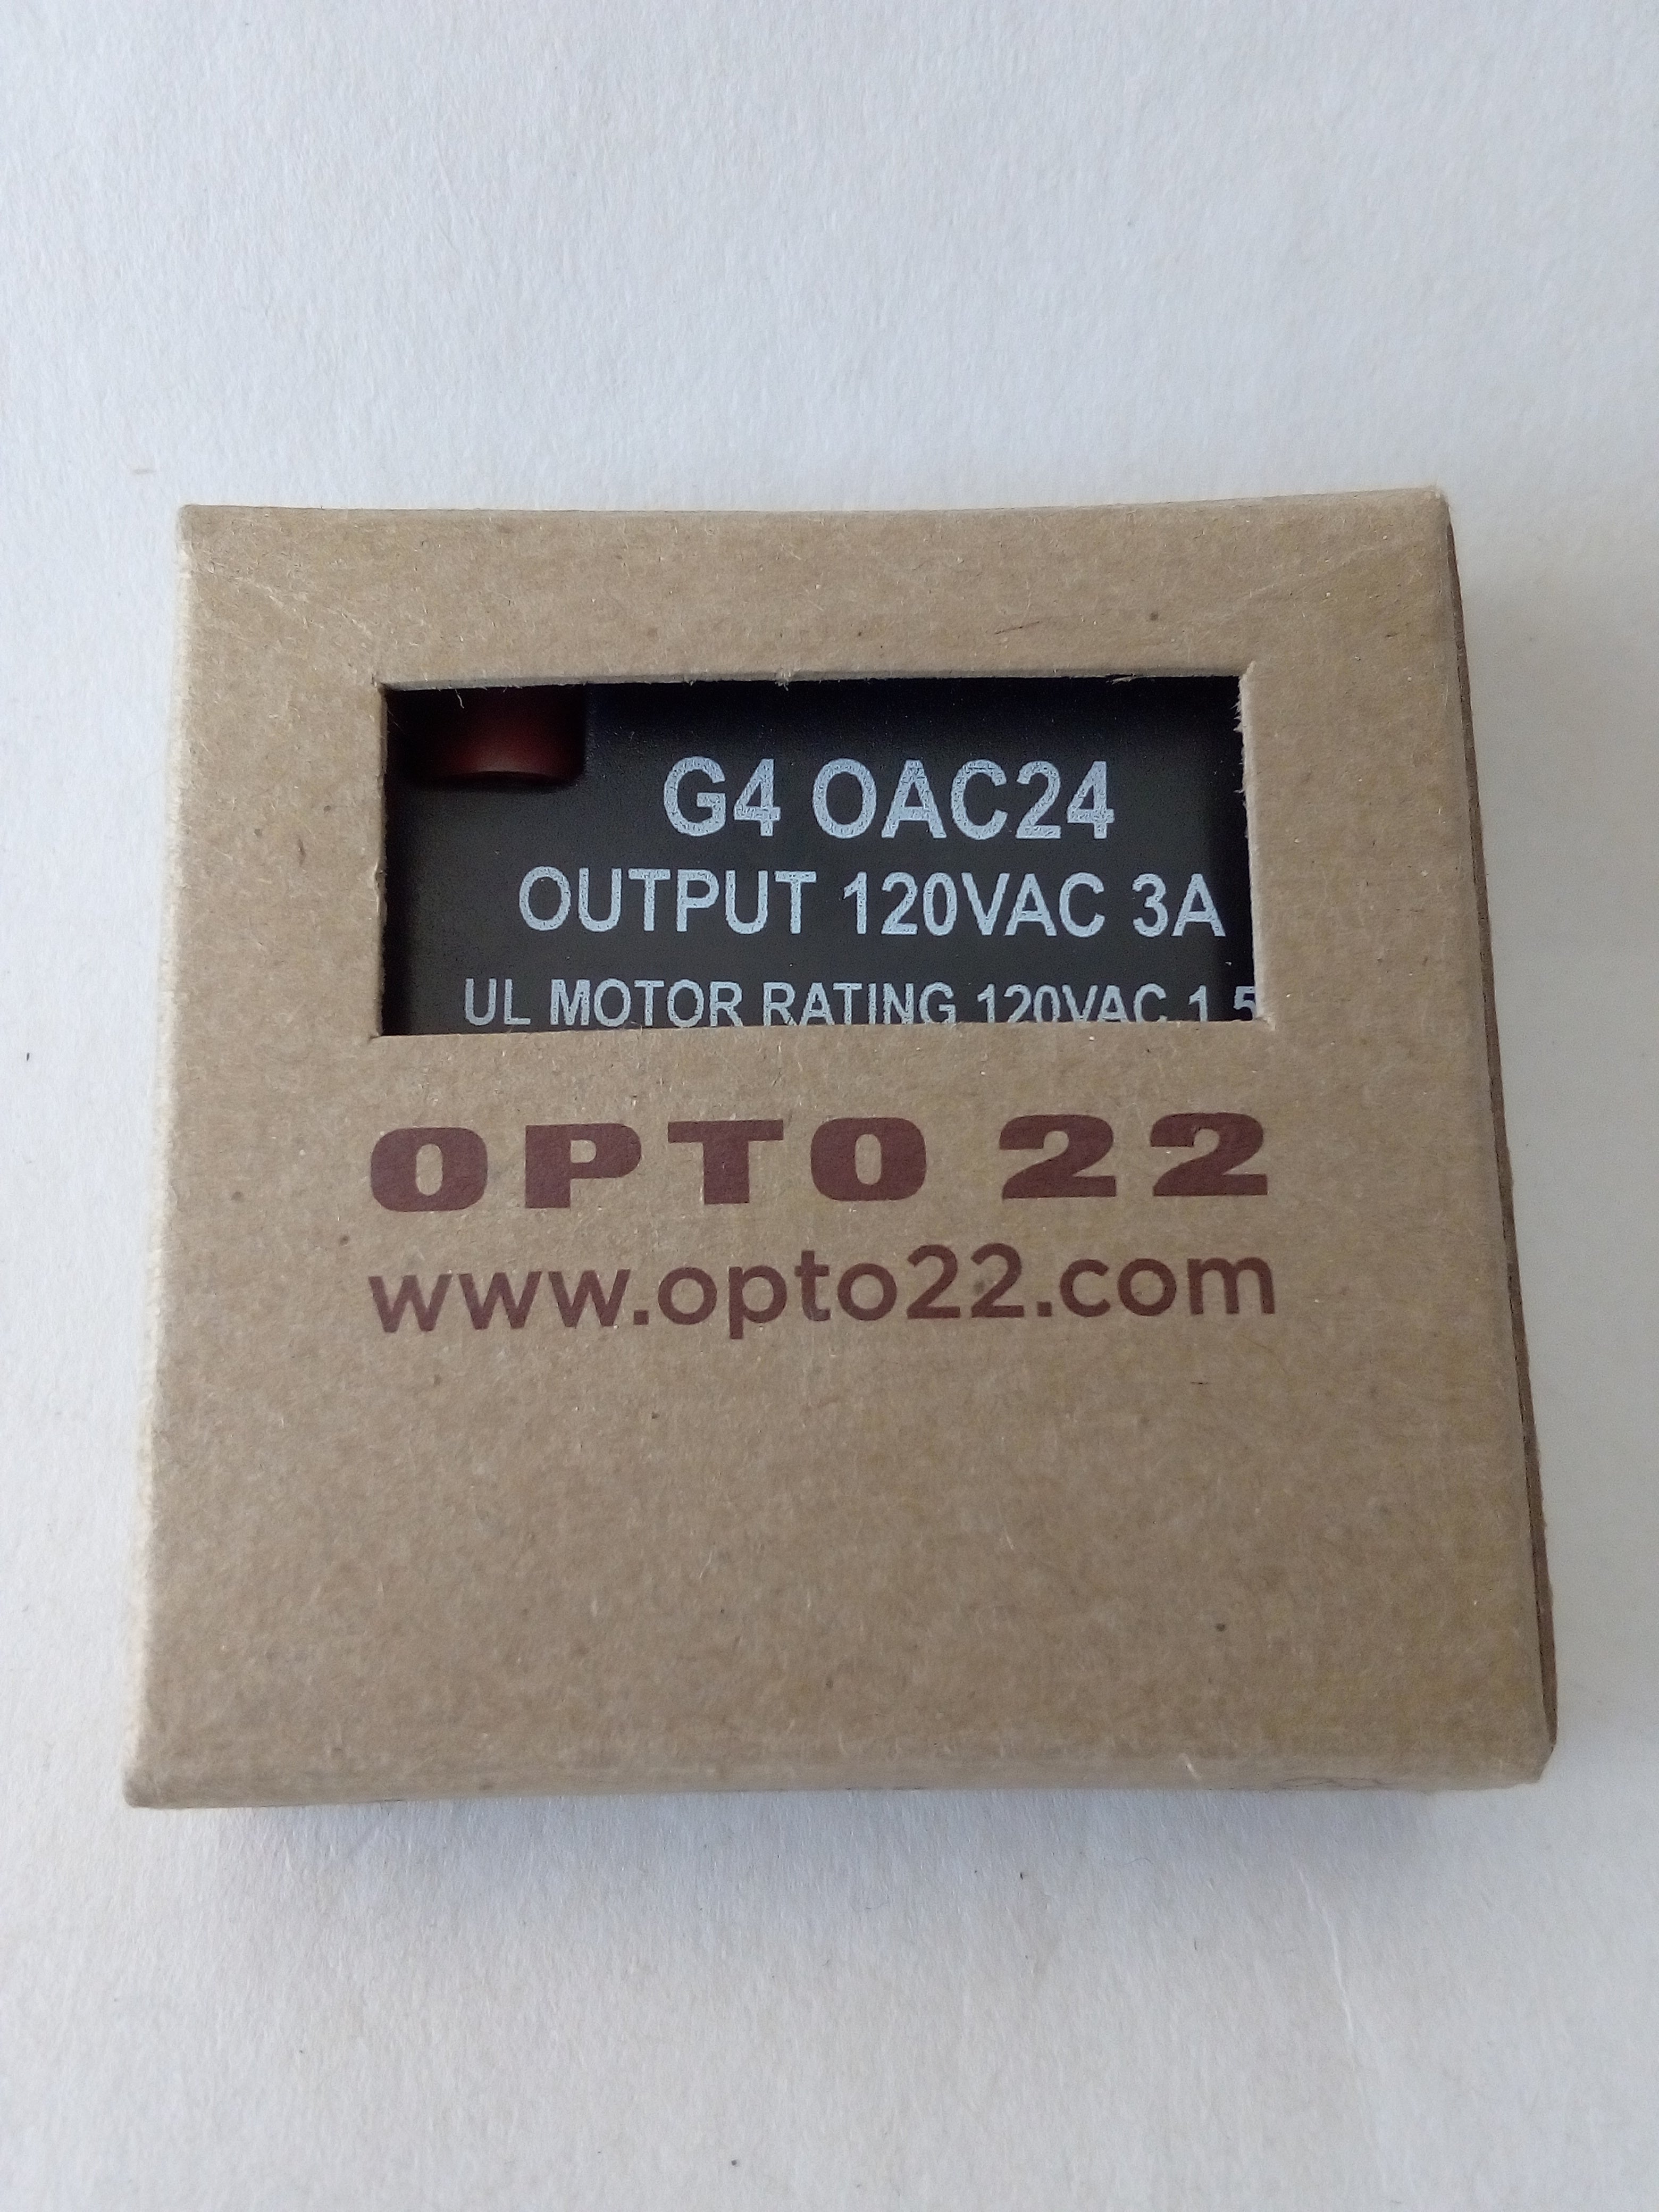 Modulo Opto 22 G4 OAC24